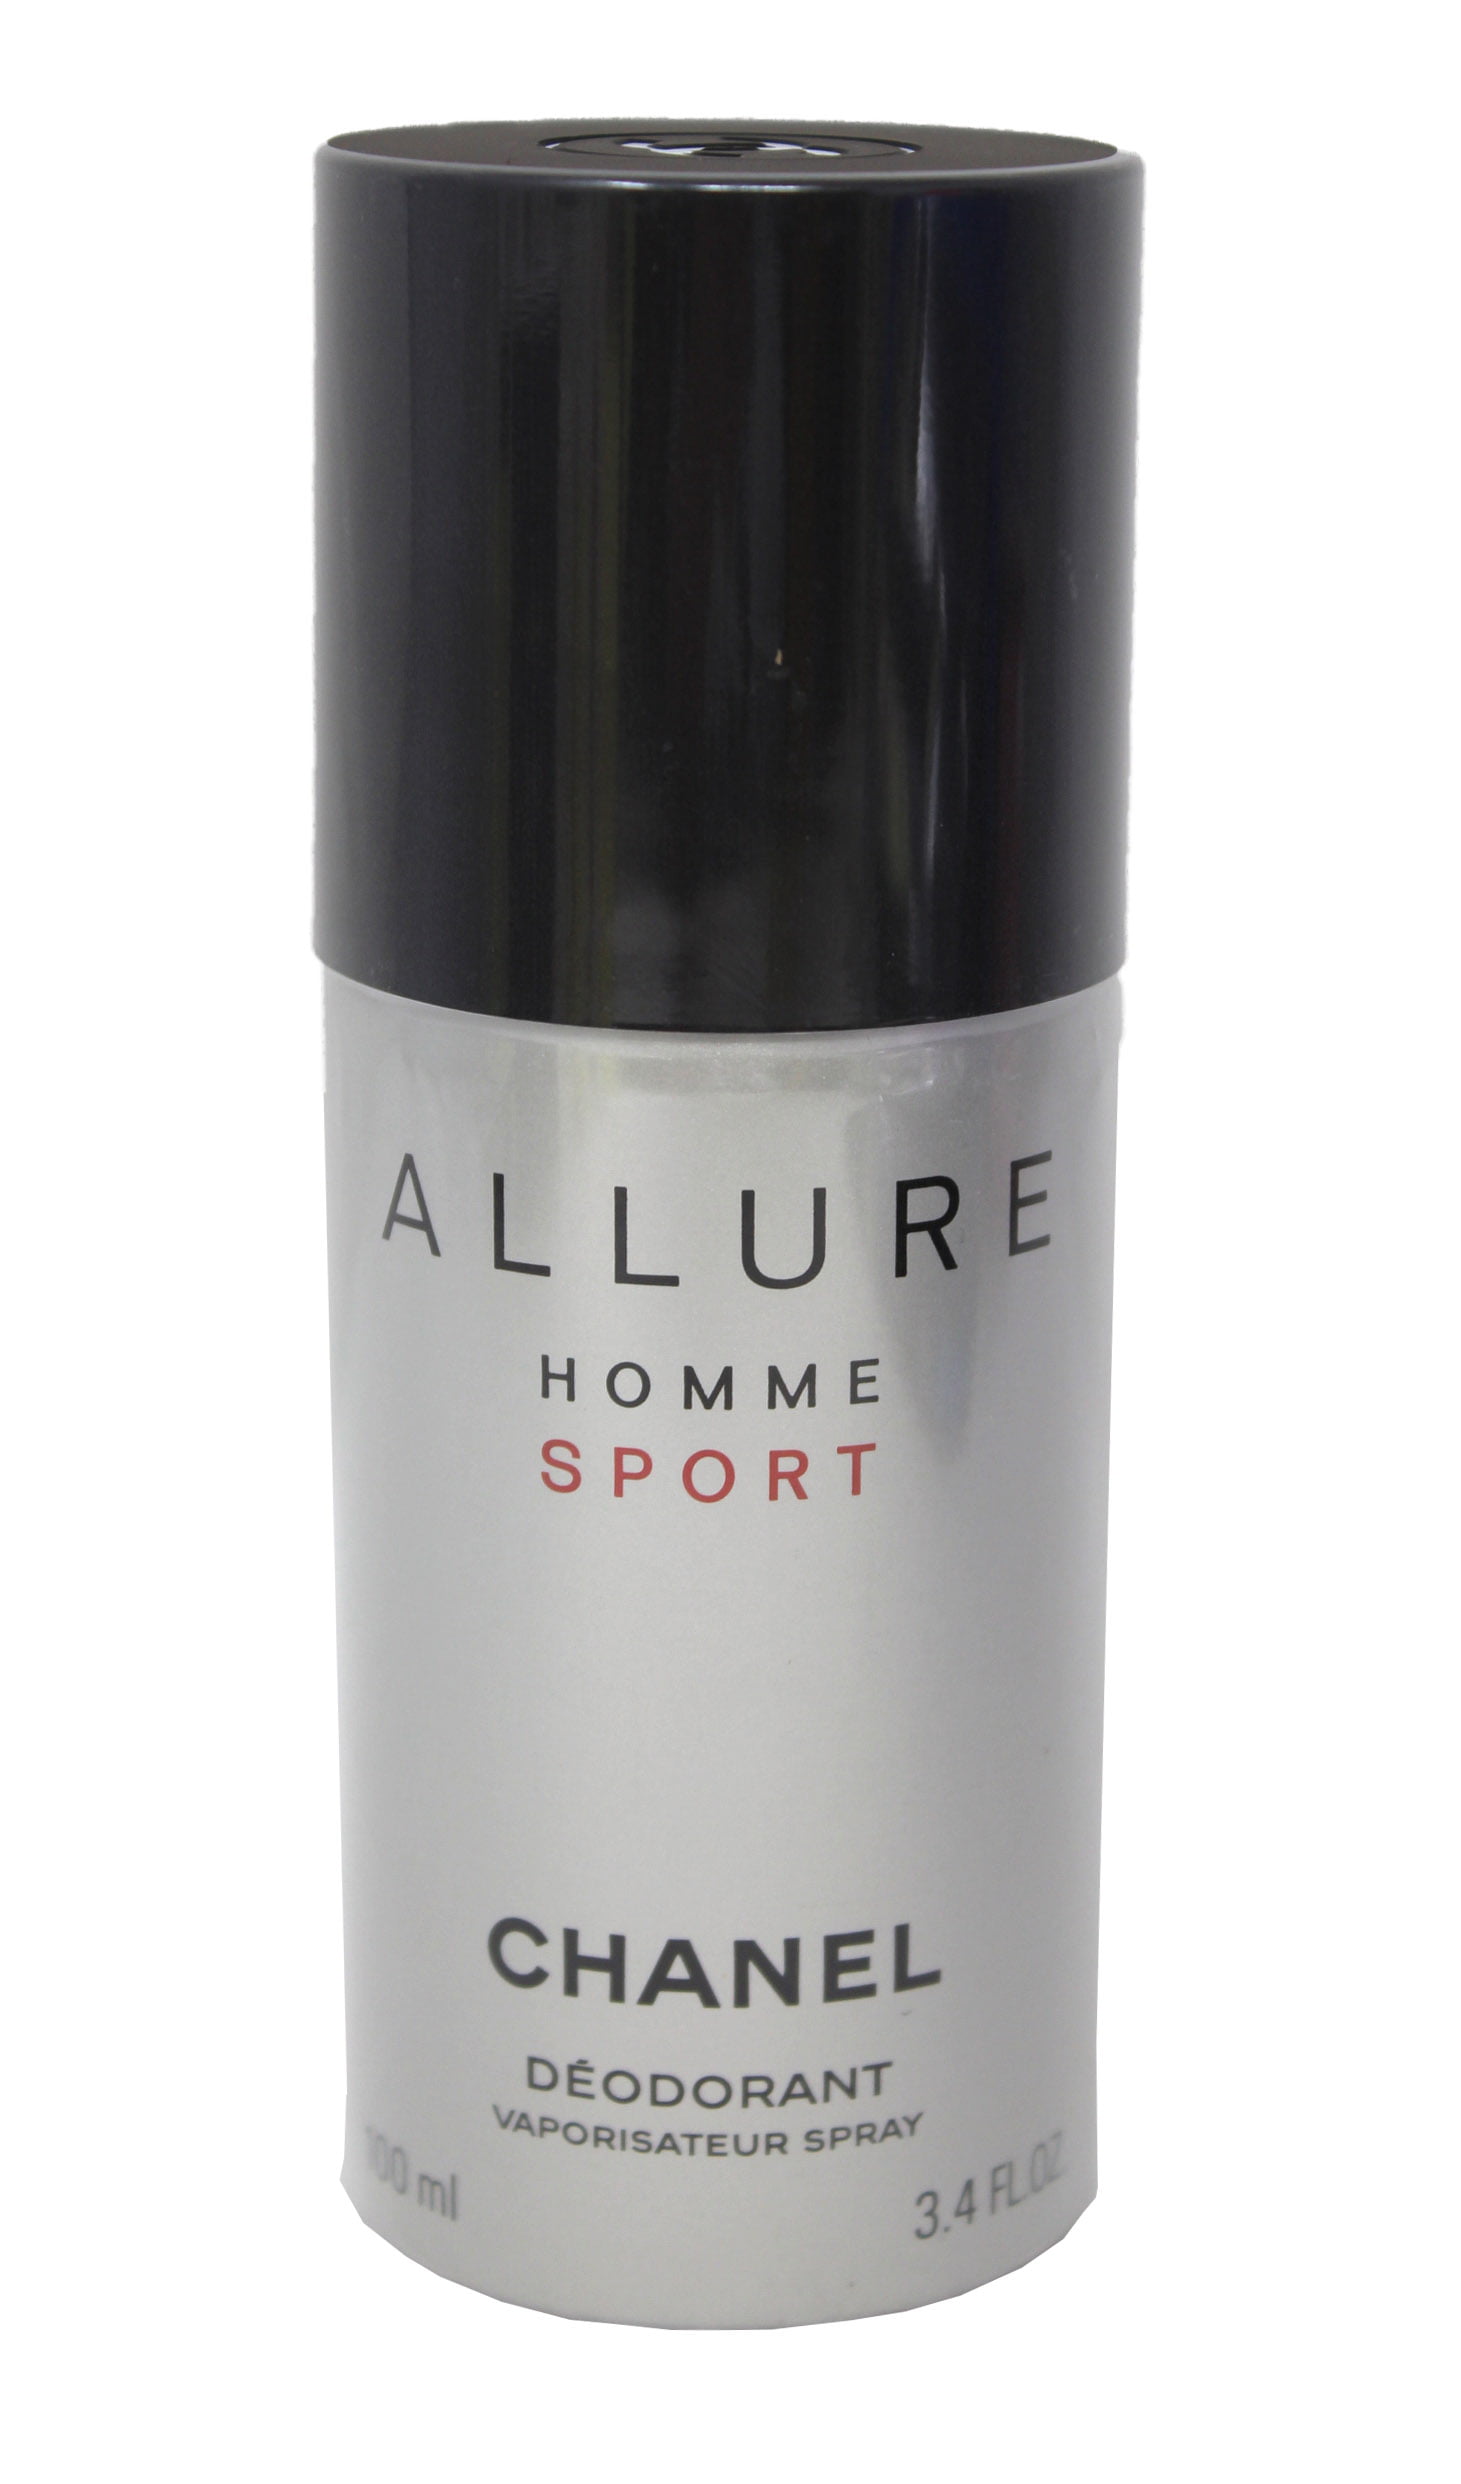 Chanel Allure Homme Sport Deodorant Spray Ounces - Walmart.com